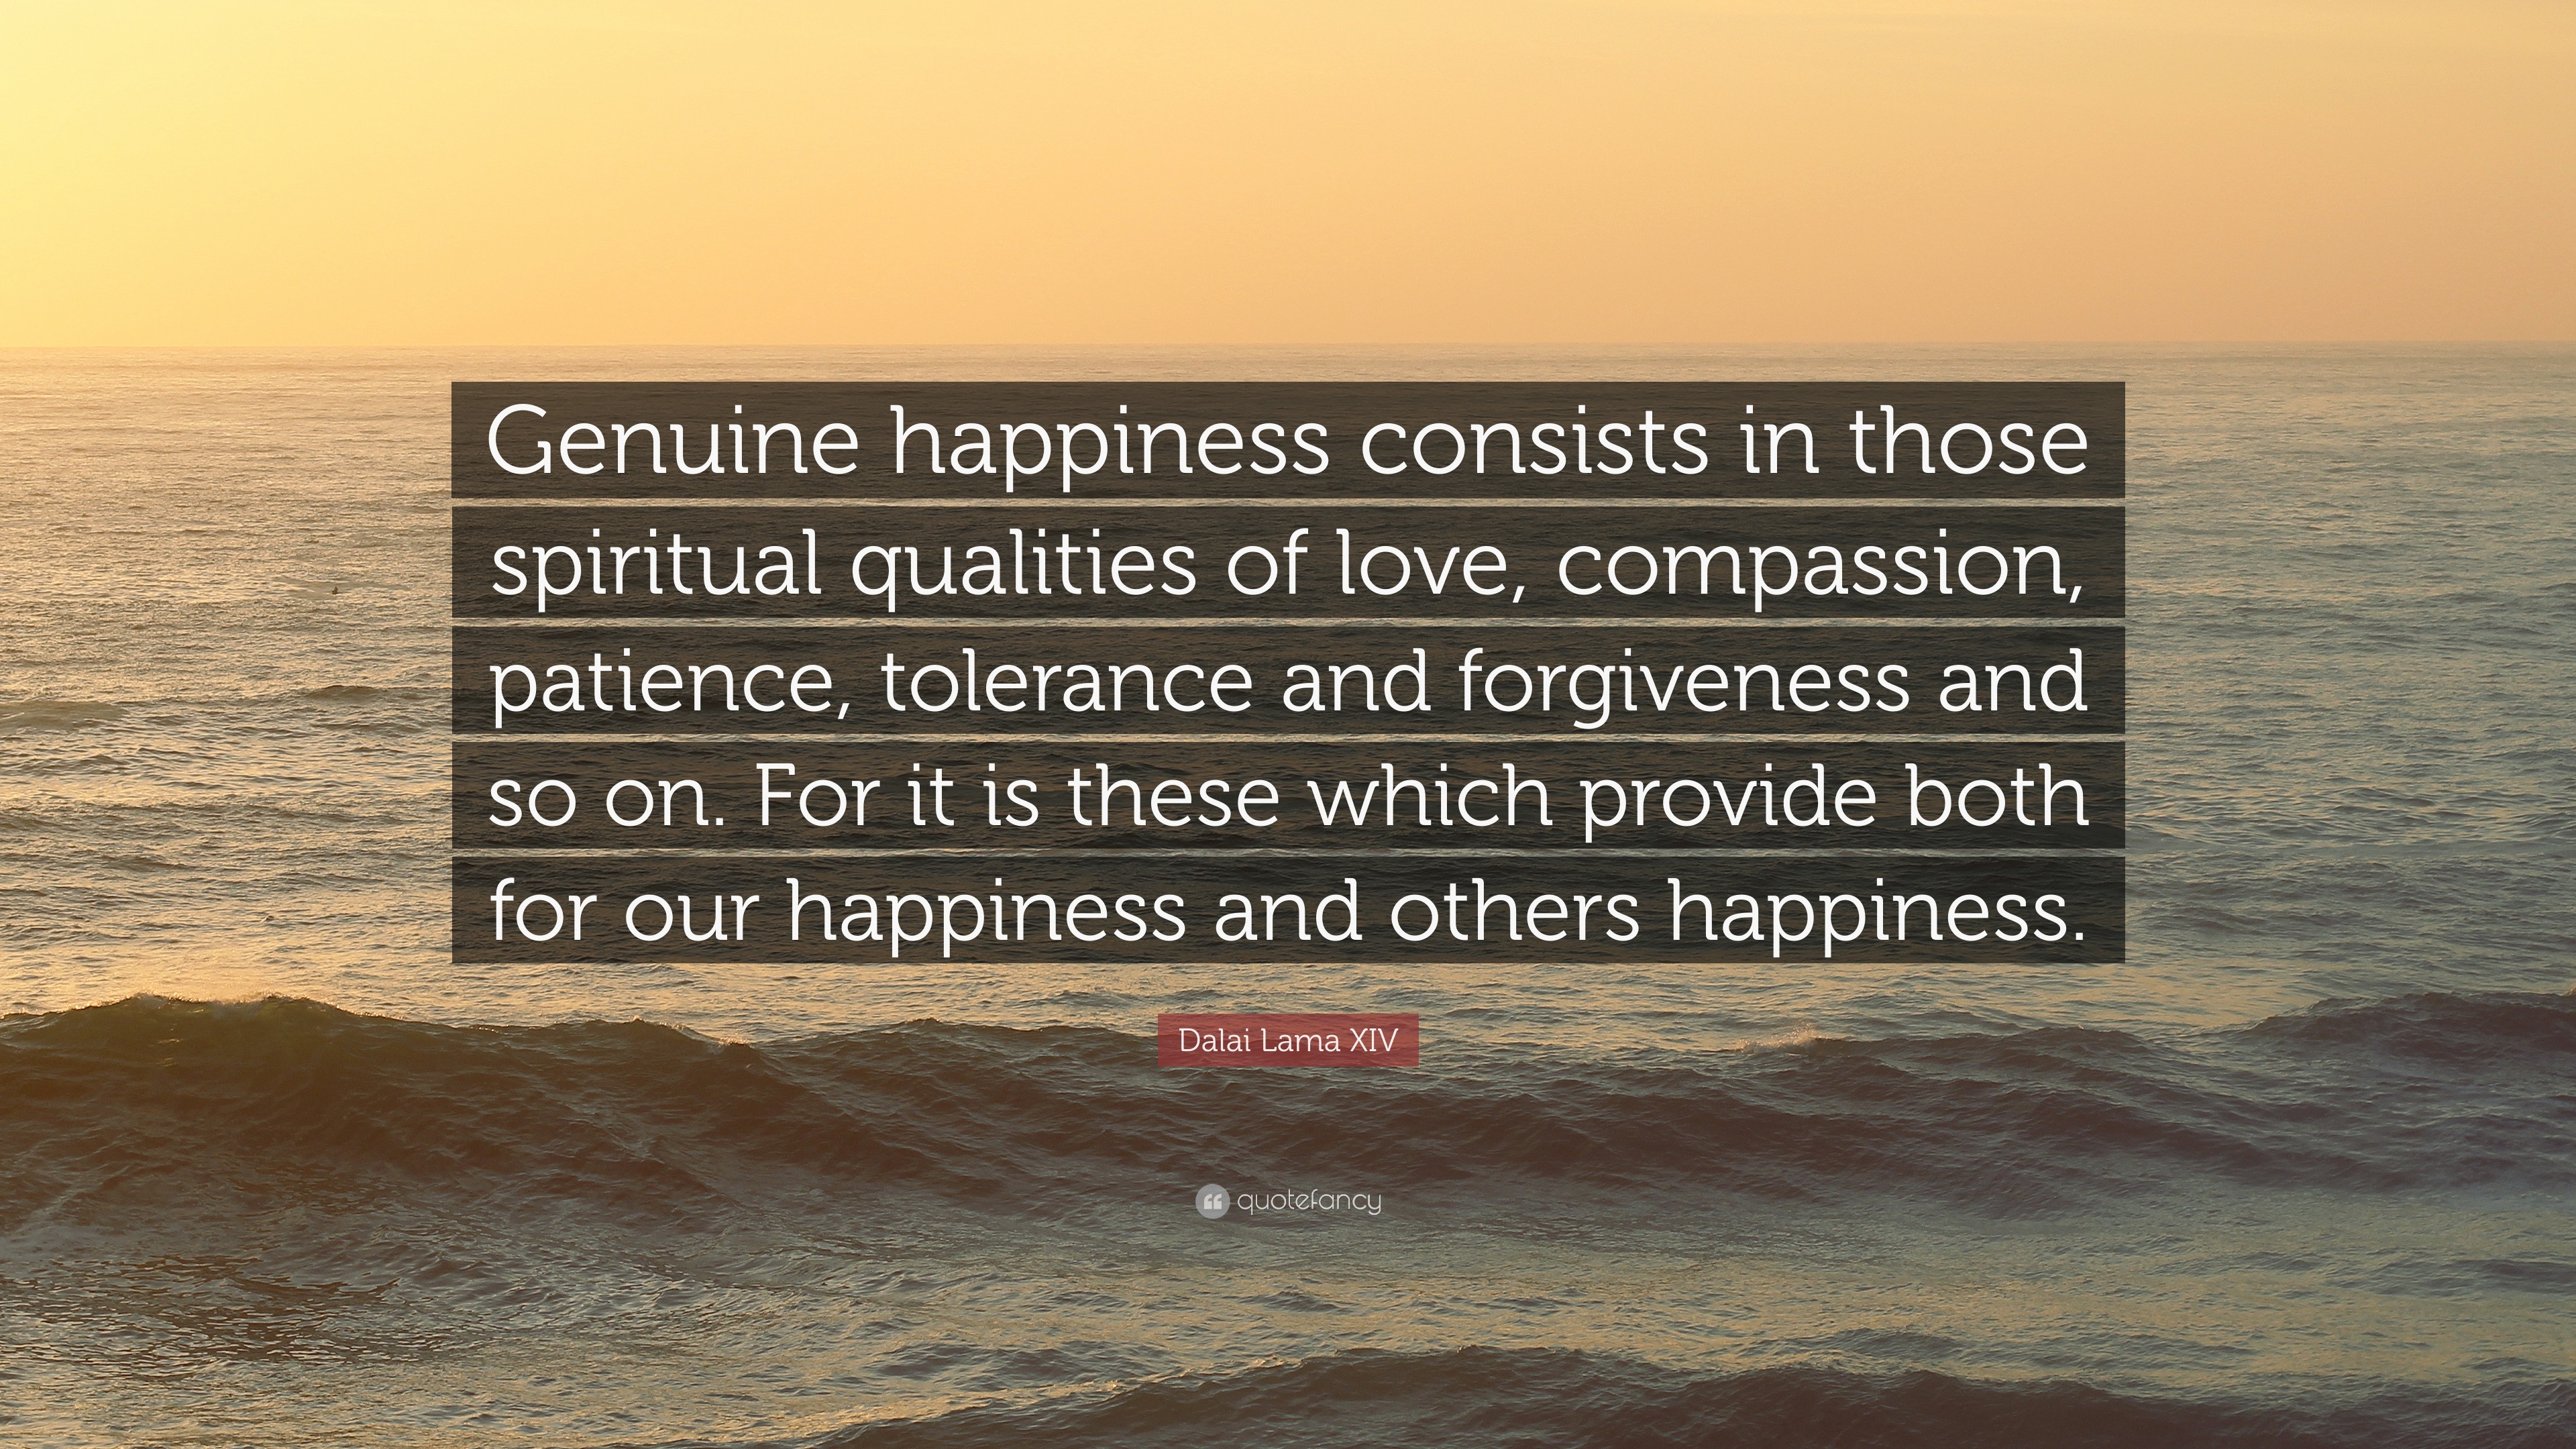 The Art of Happiness by Dalai Lama XIV